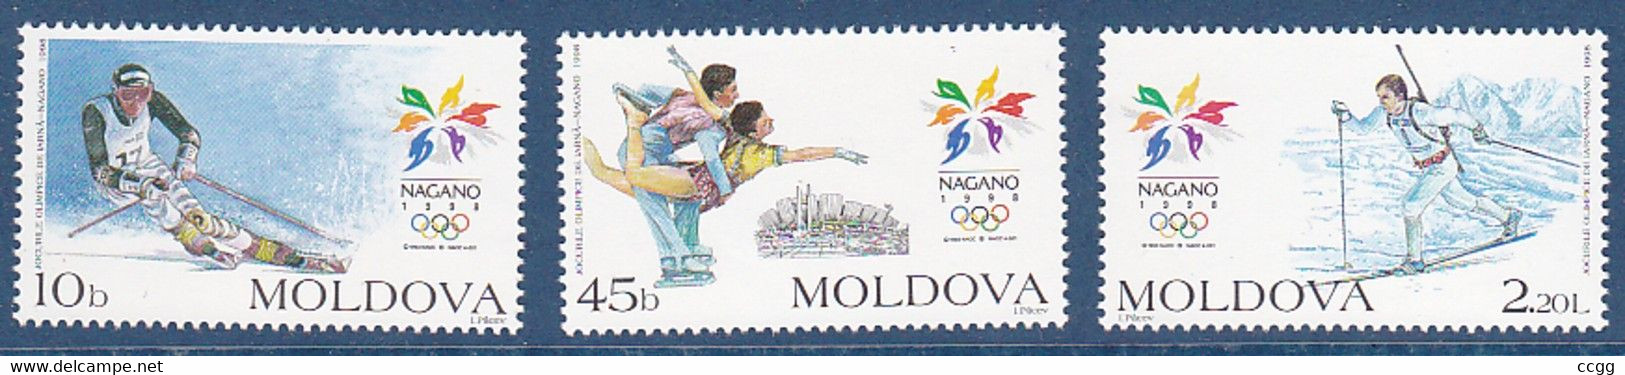 Olympic Games 1998 , MOLDAVIE -  Zegels  Postfris - Winter 1998: Nagano